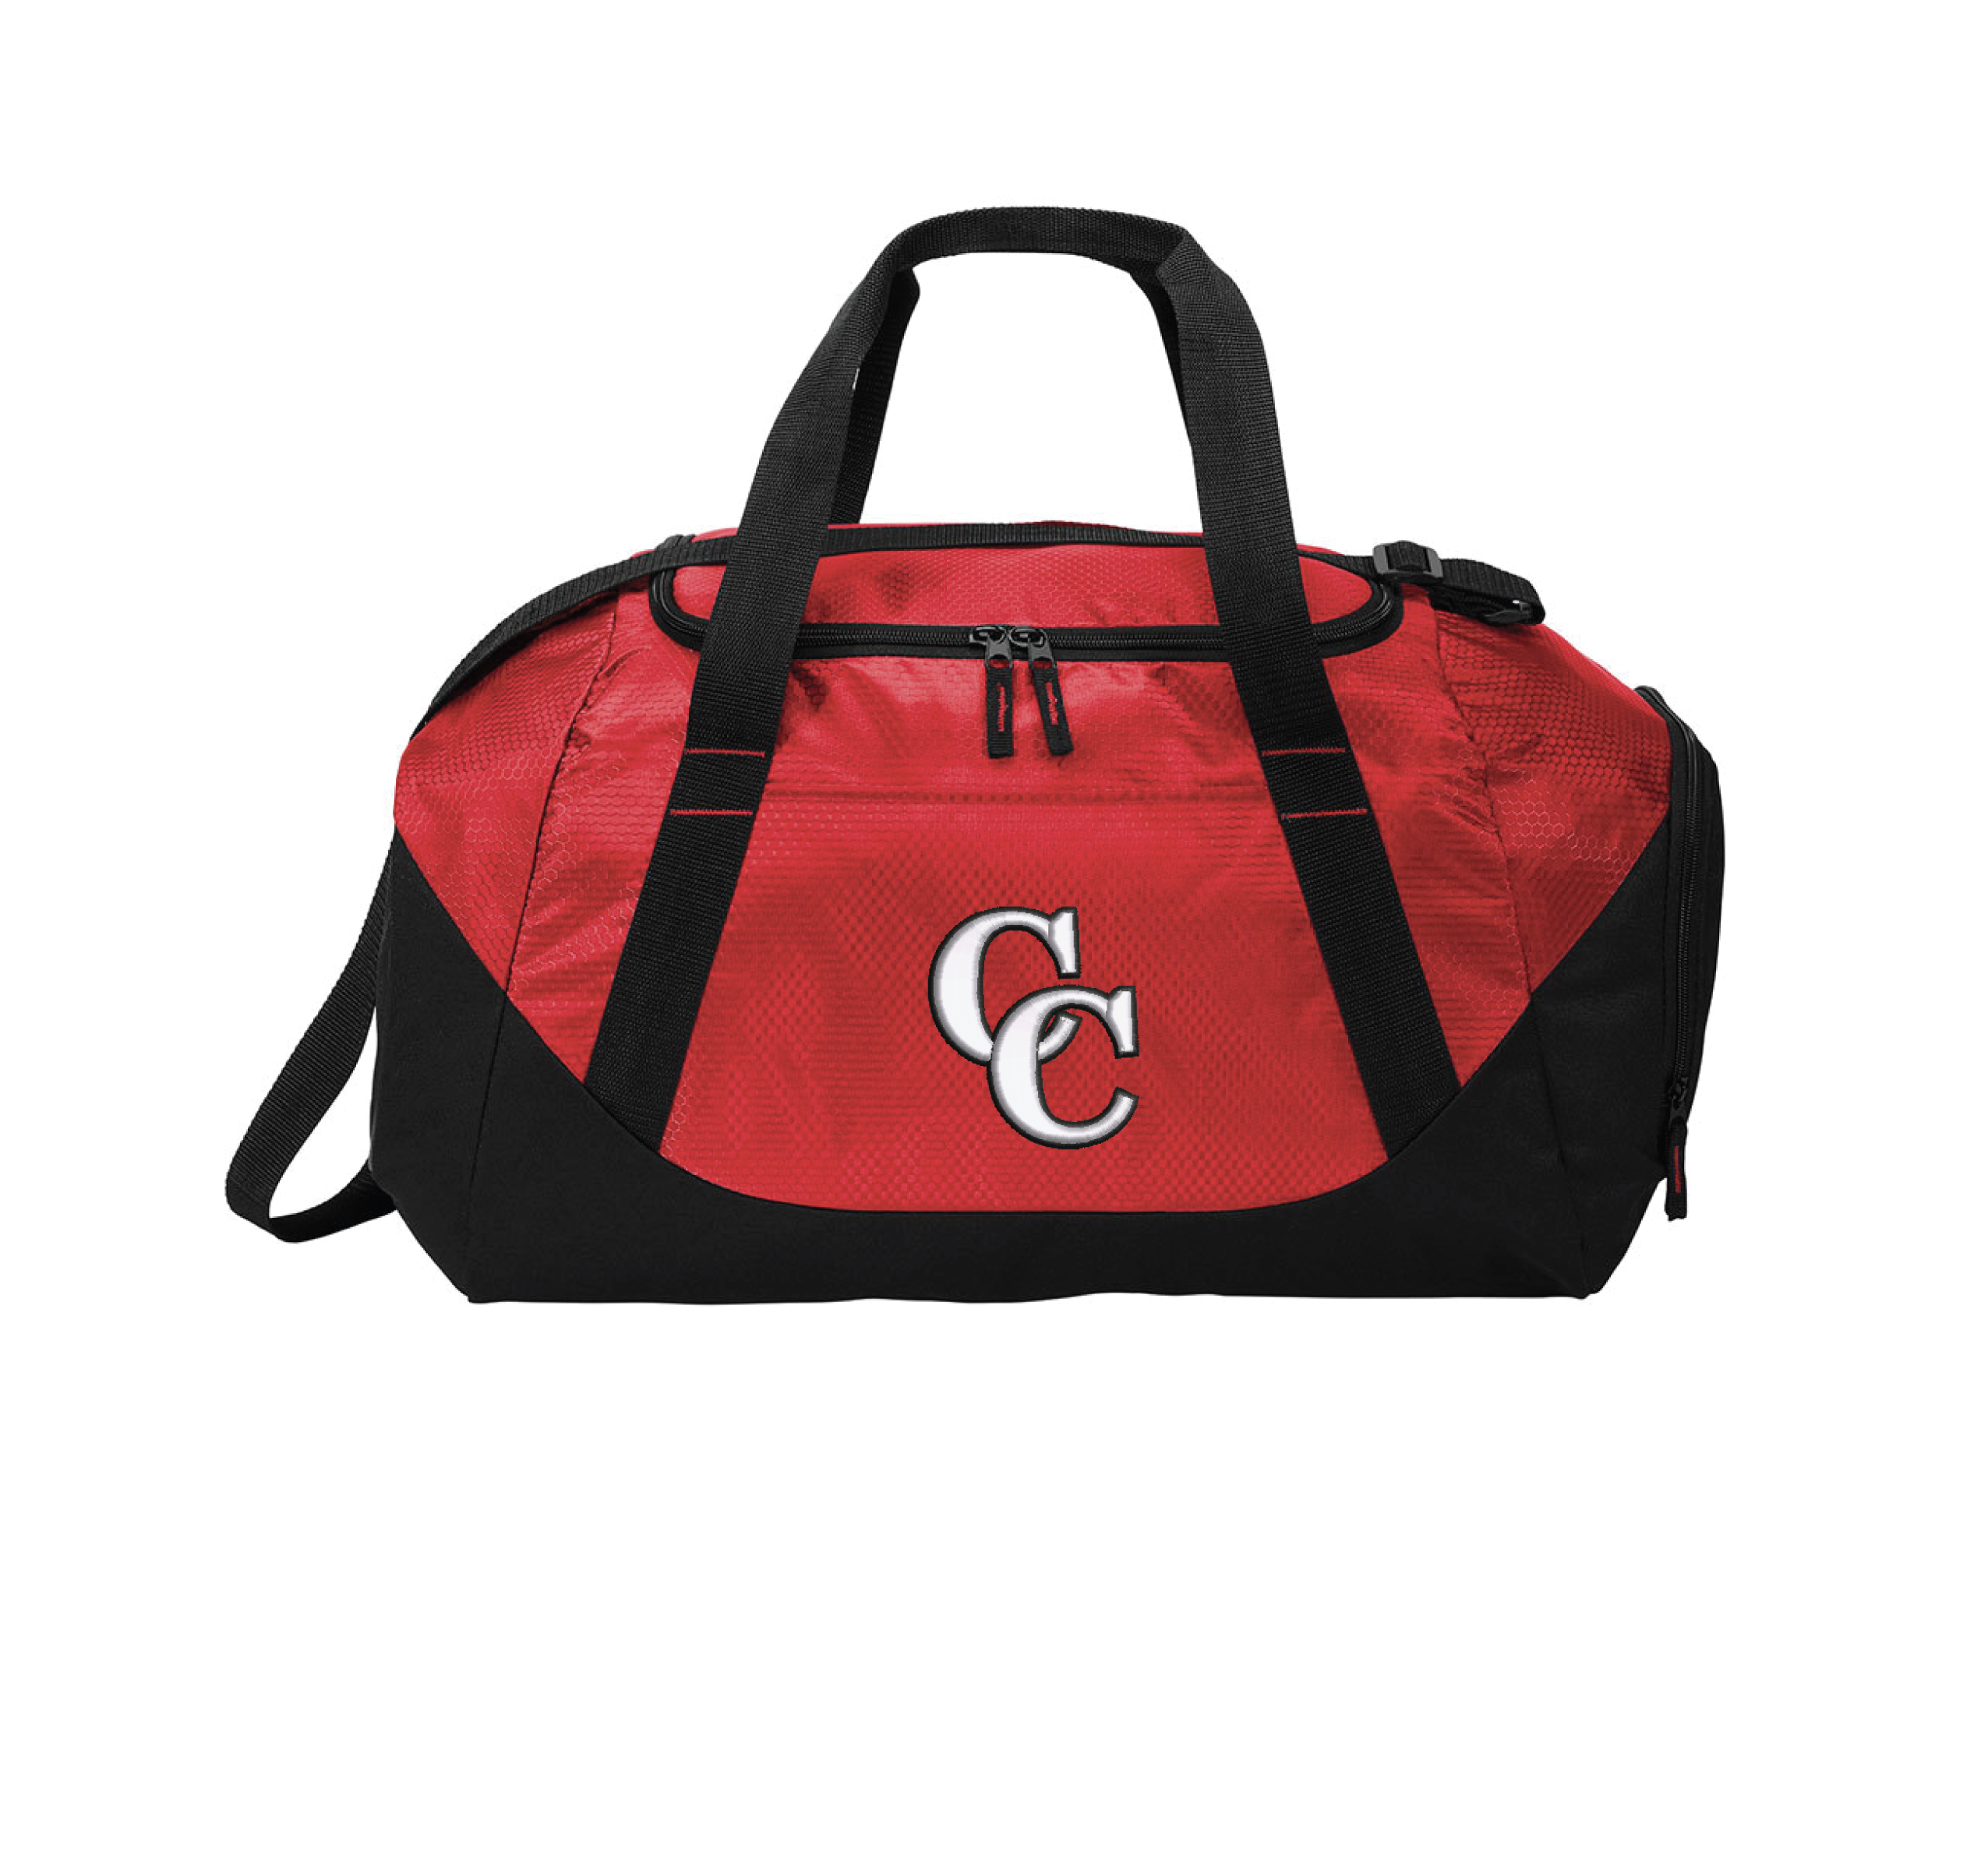 CC Duffle Bag